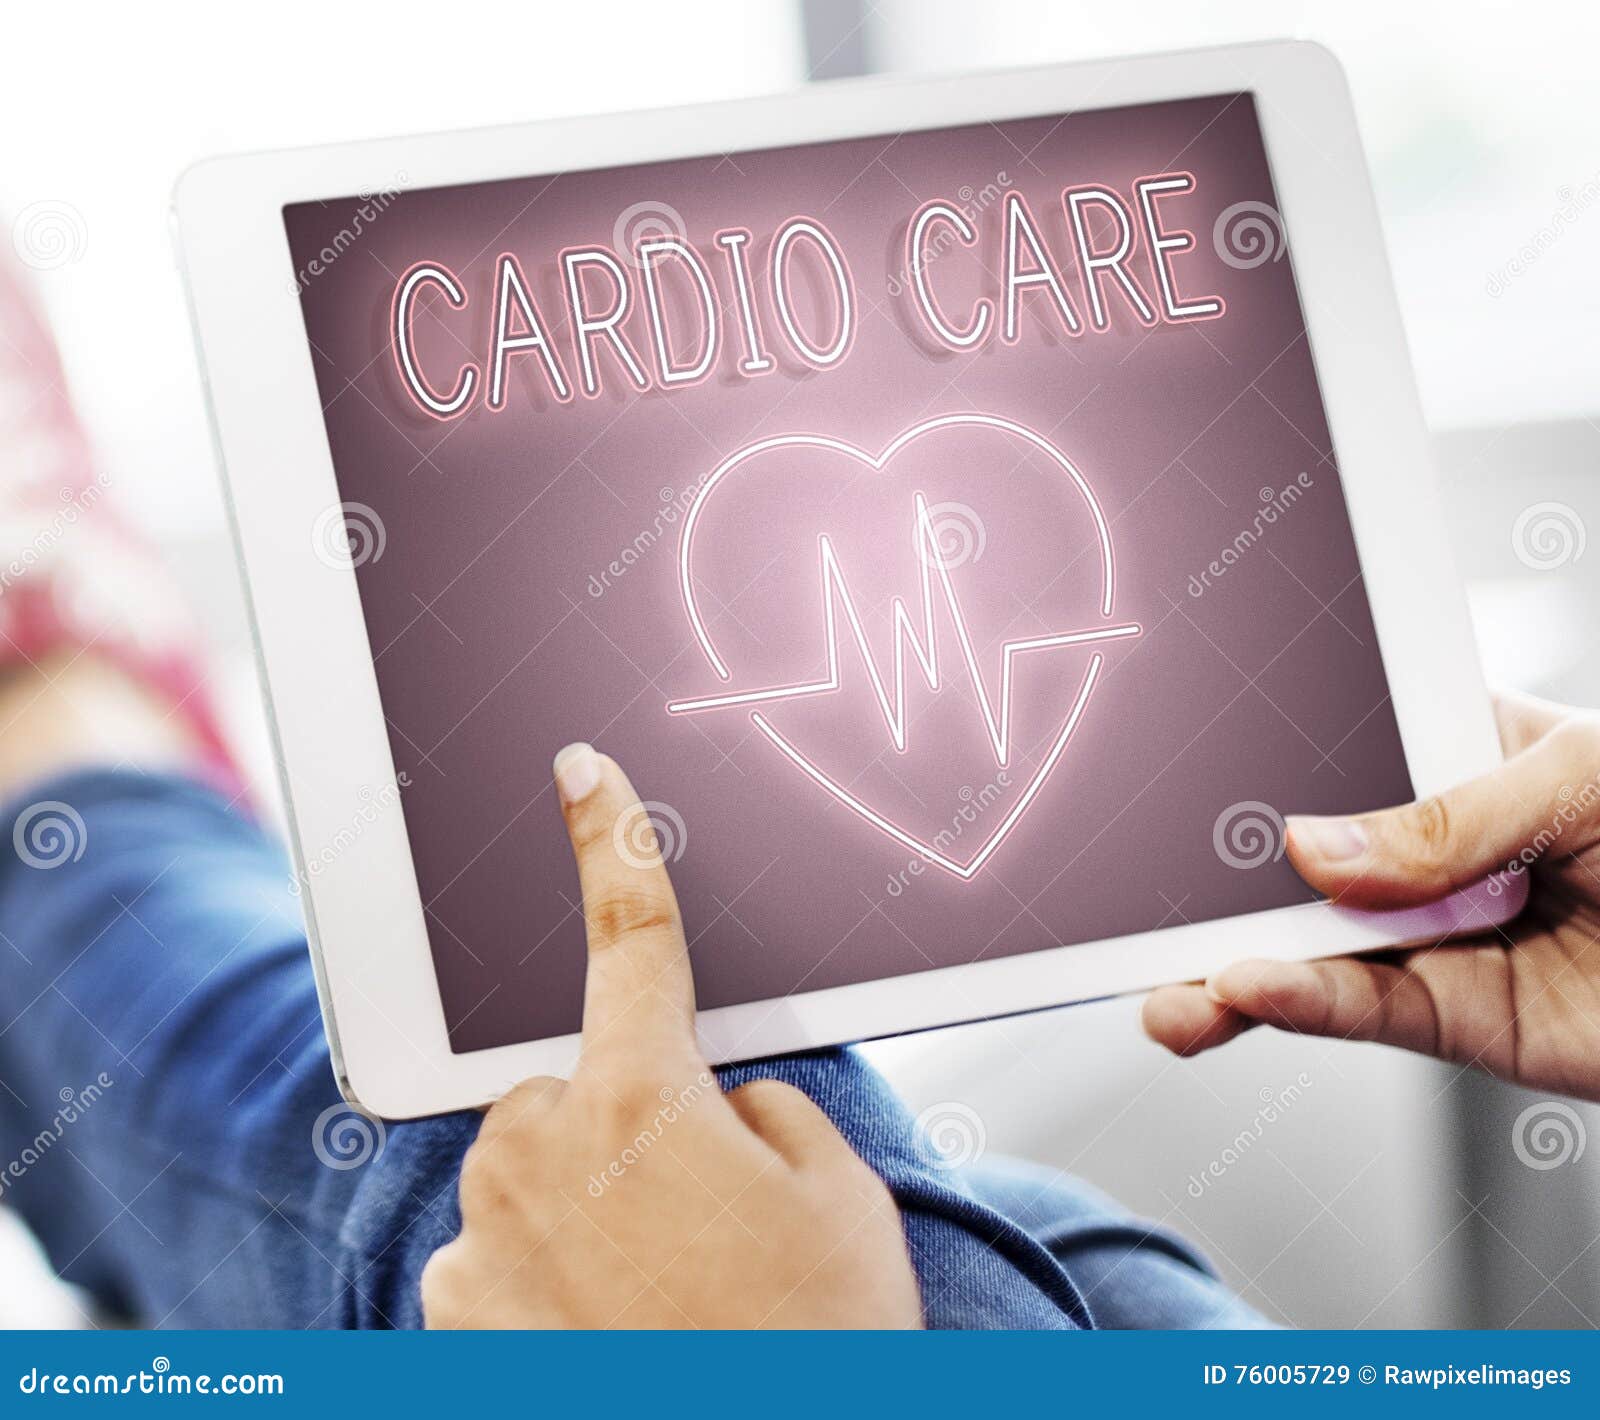 cardiac cardiovascular disease heart graphic concept